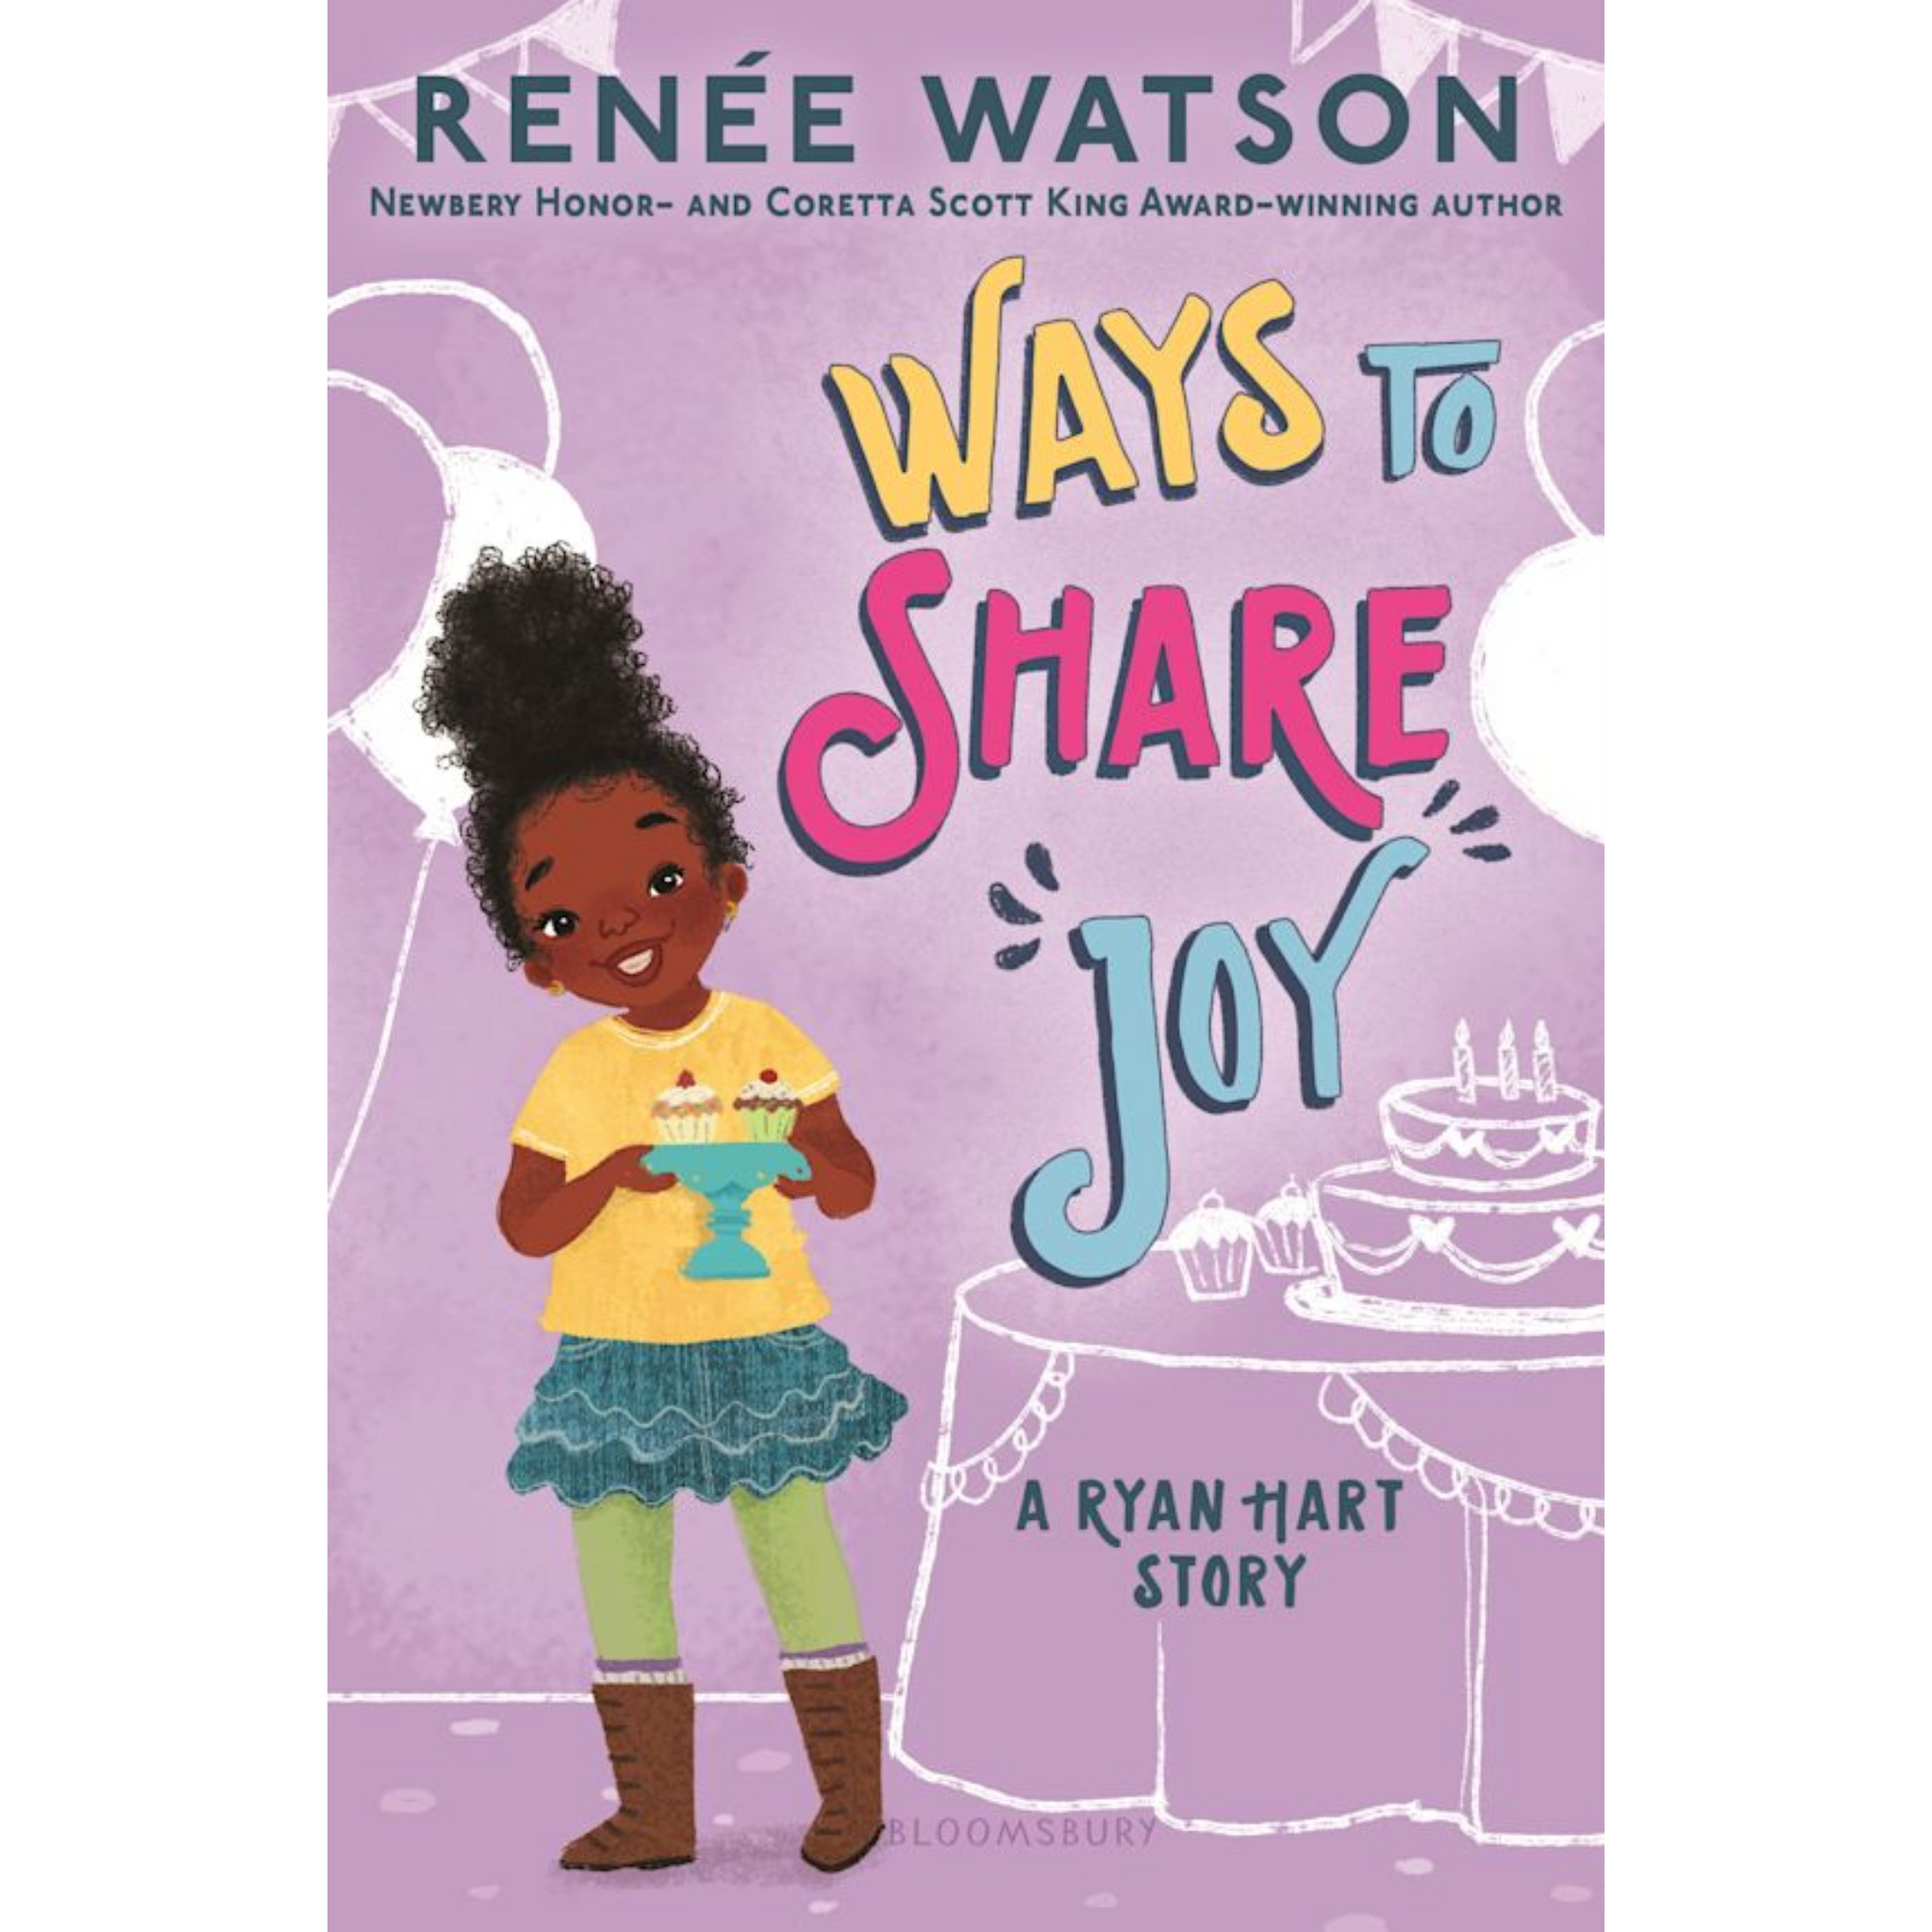 ways to share joy renee watson